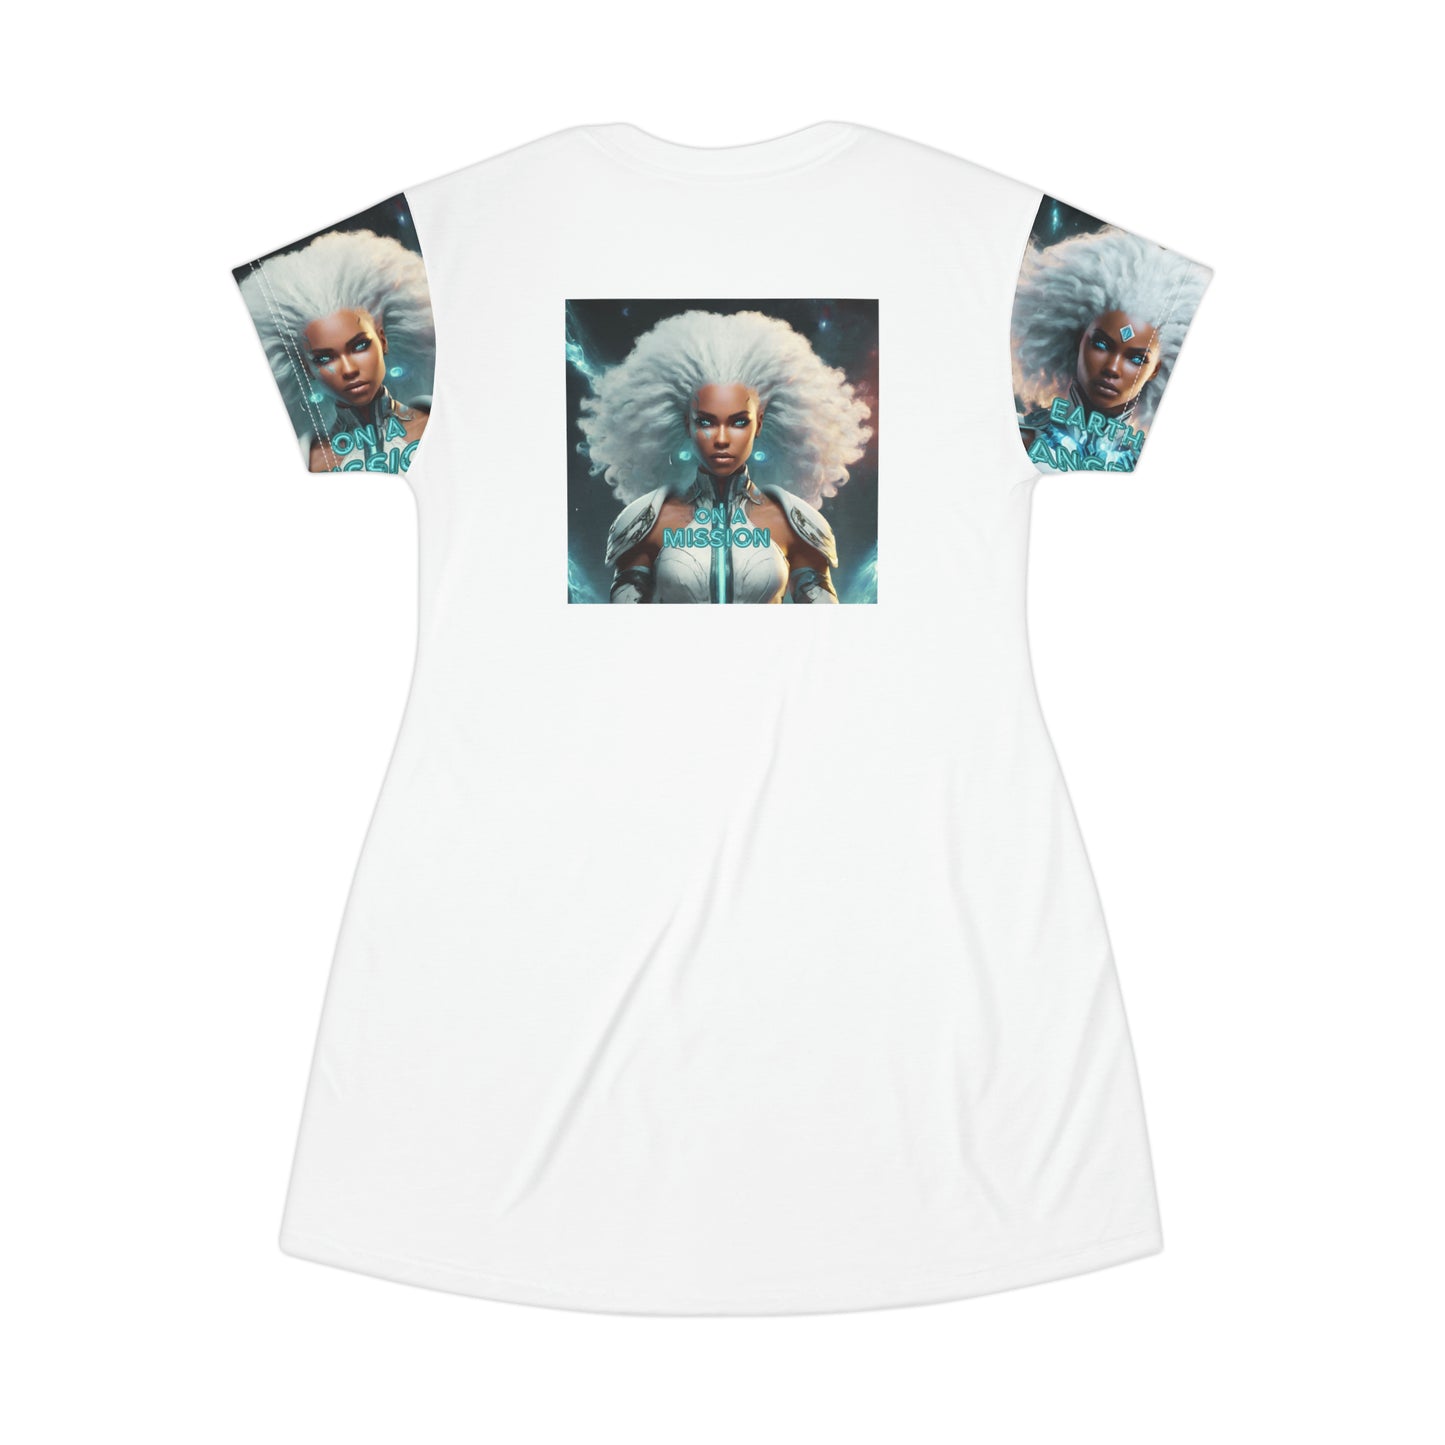 Women's Earth angel on a Mission" T-Shirt Dress